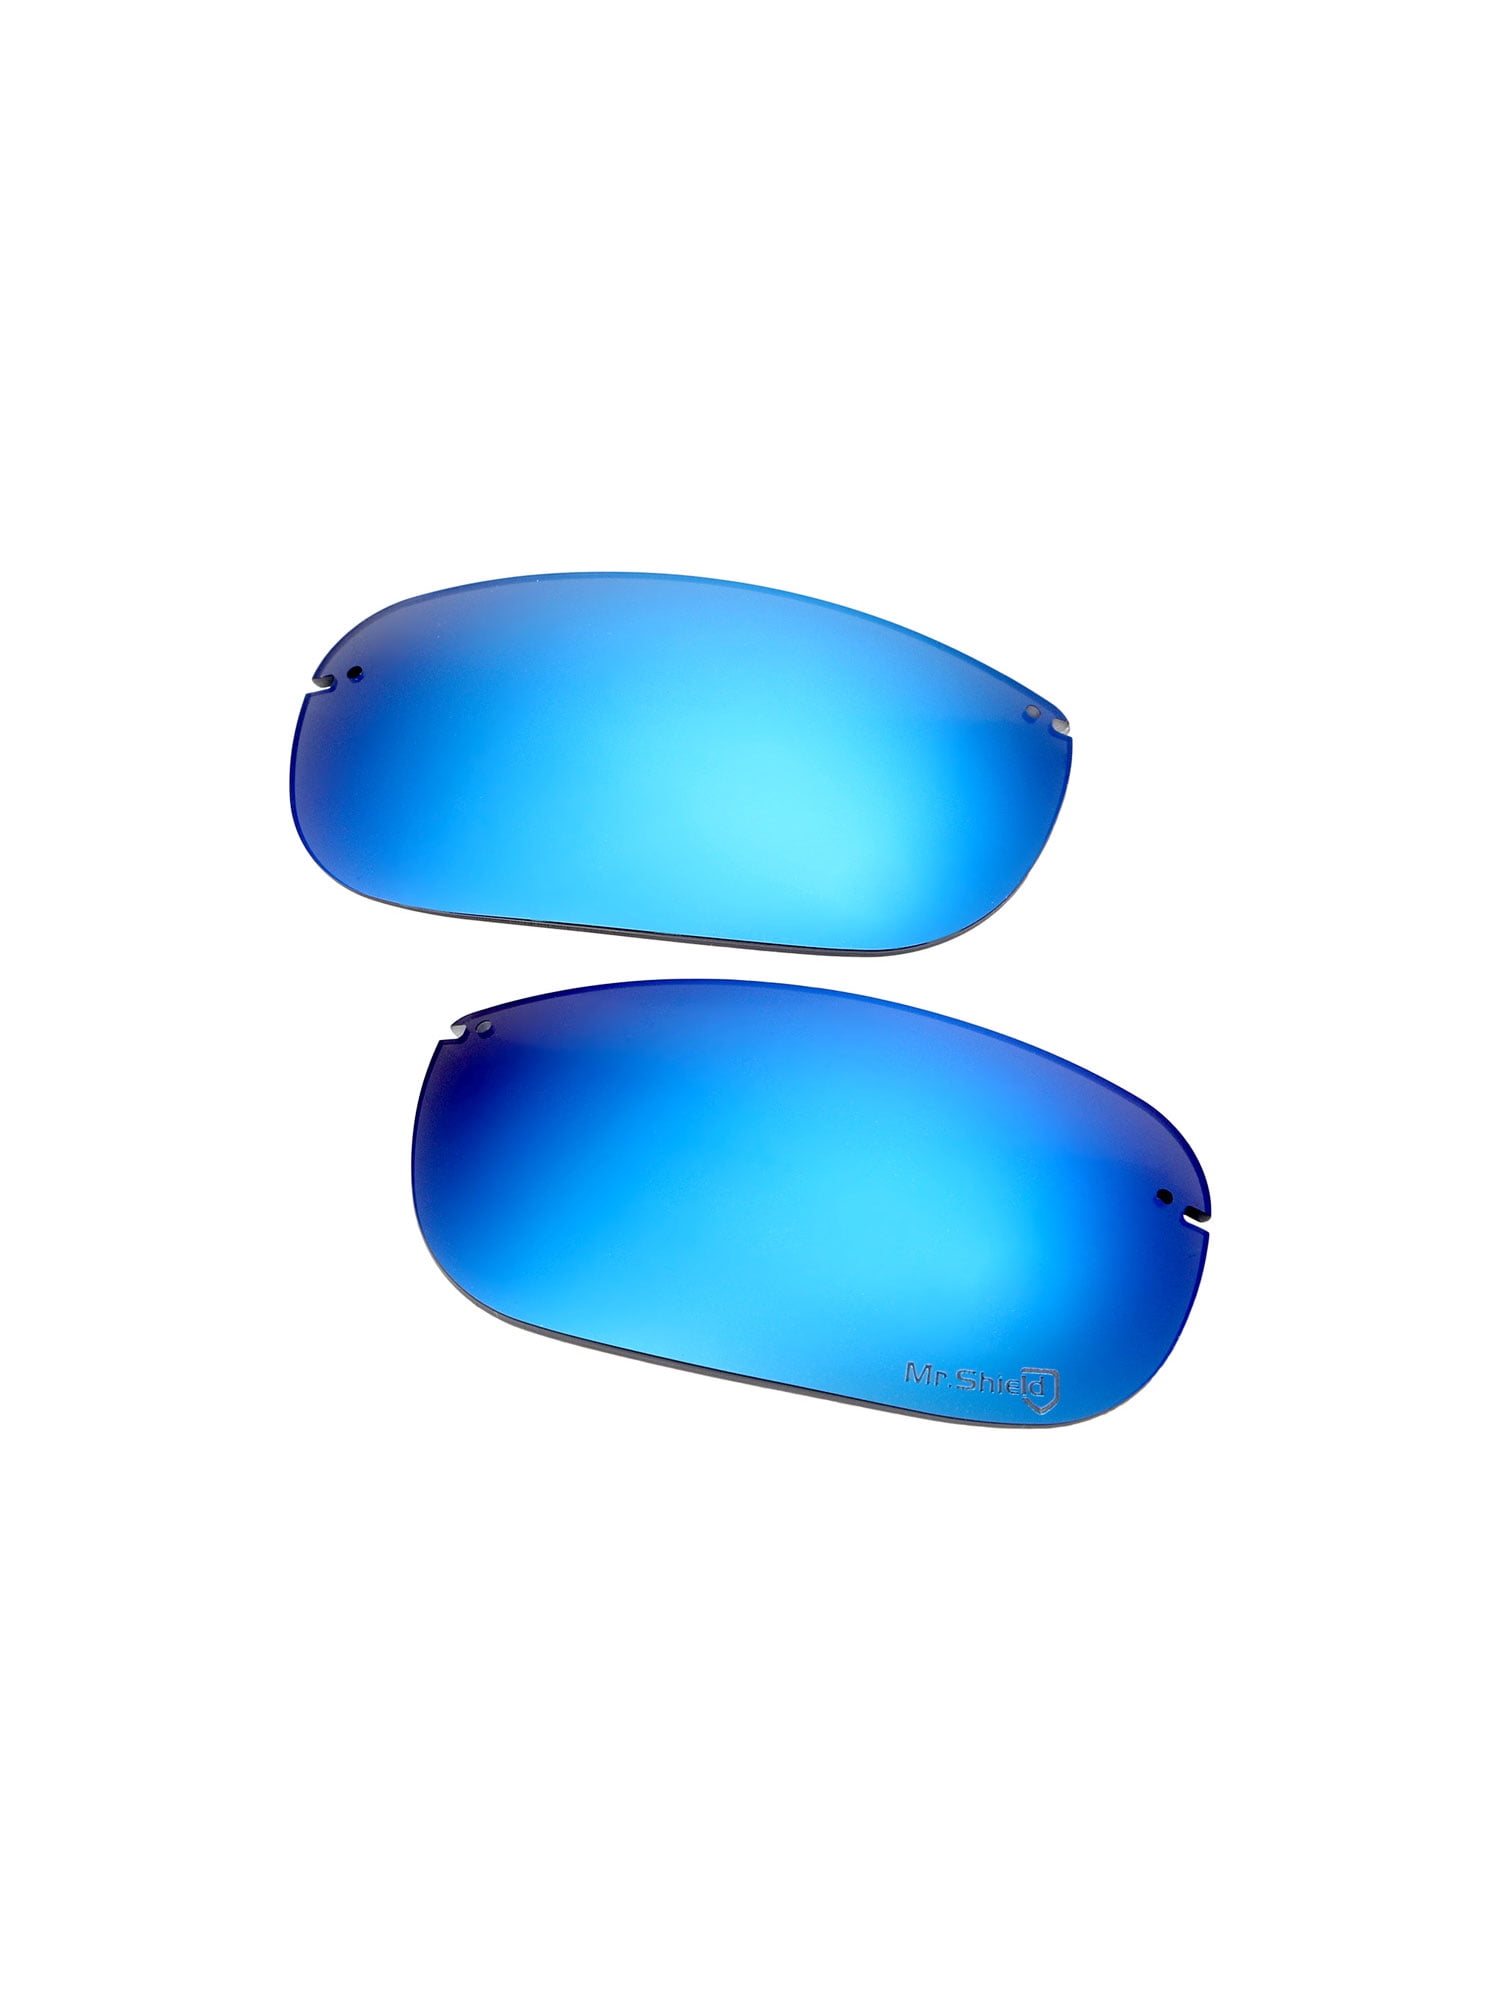 Walleva Polarized Ice Blue Replacement Lenses For Maui Jim Makaha Sunglasses 